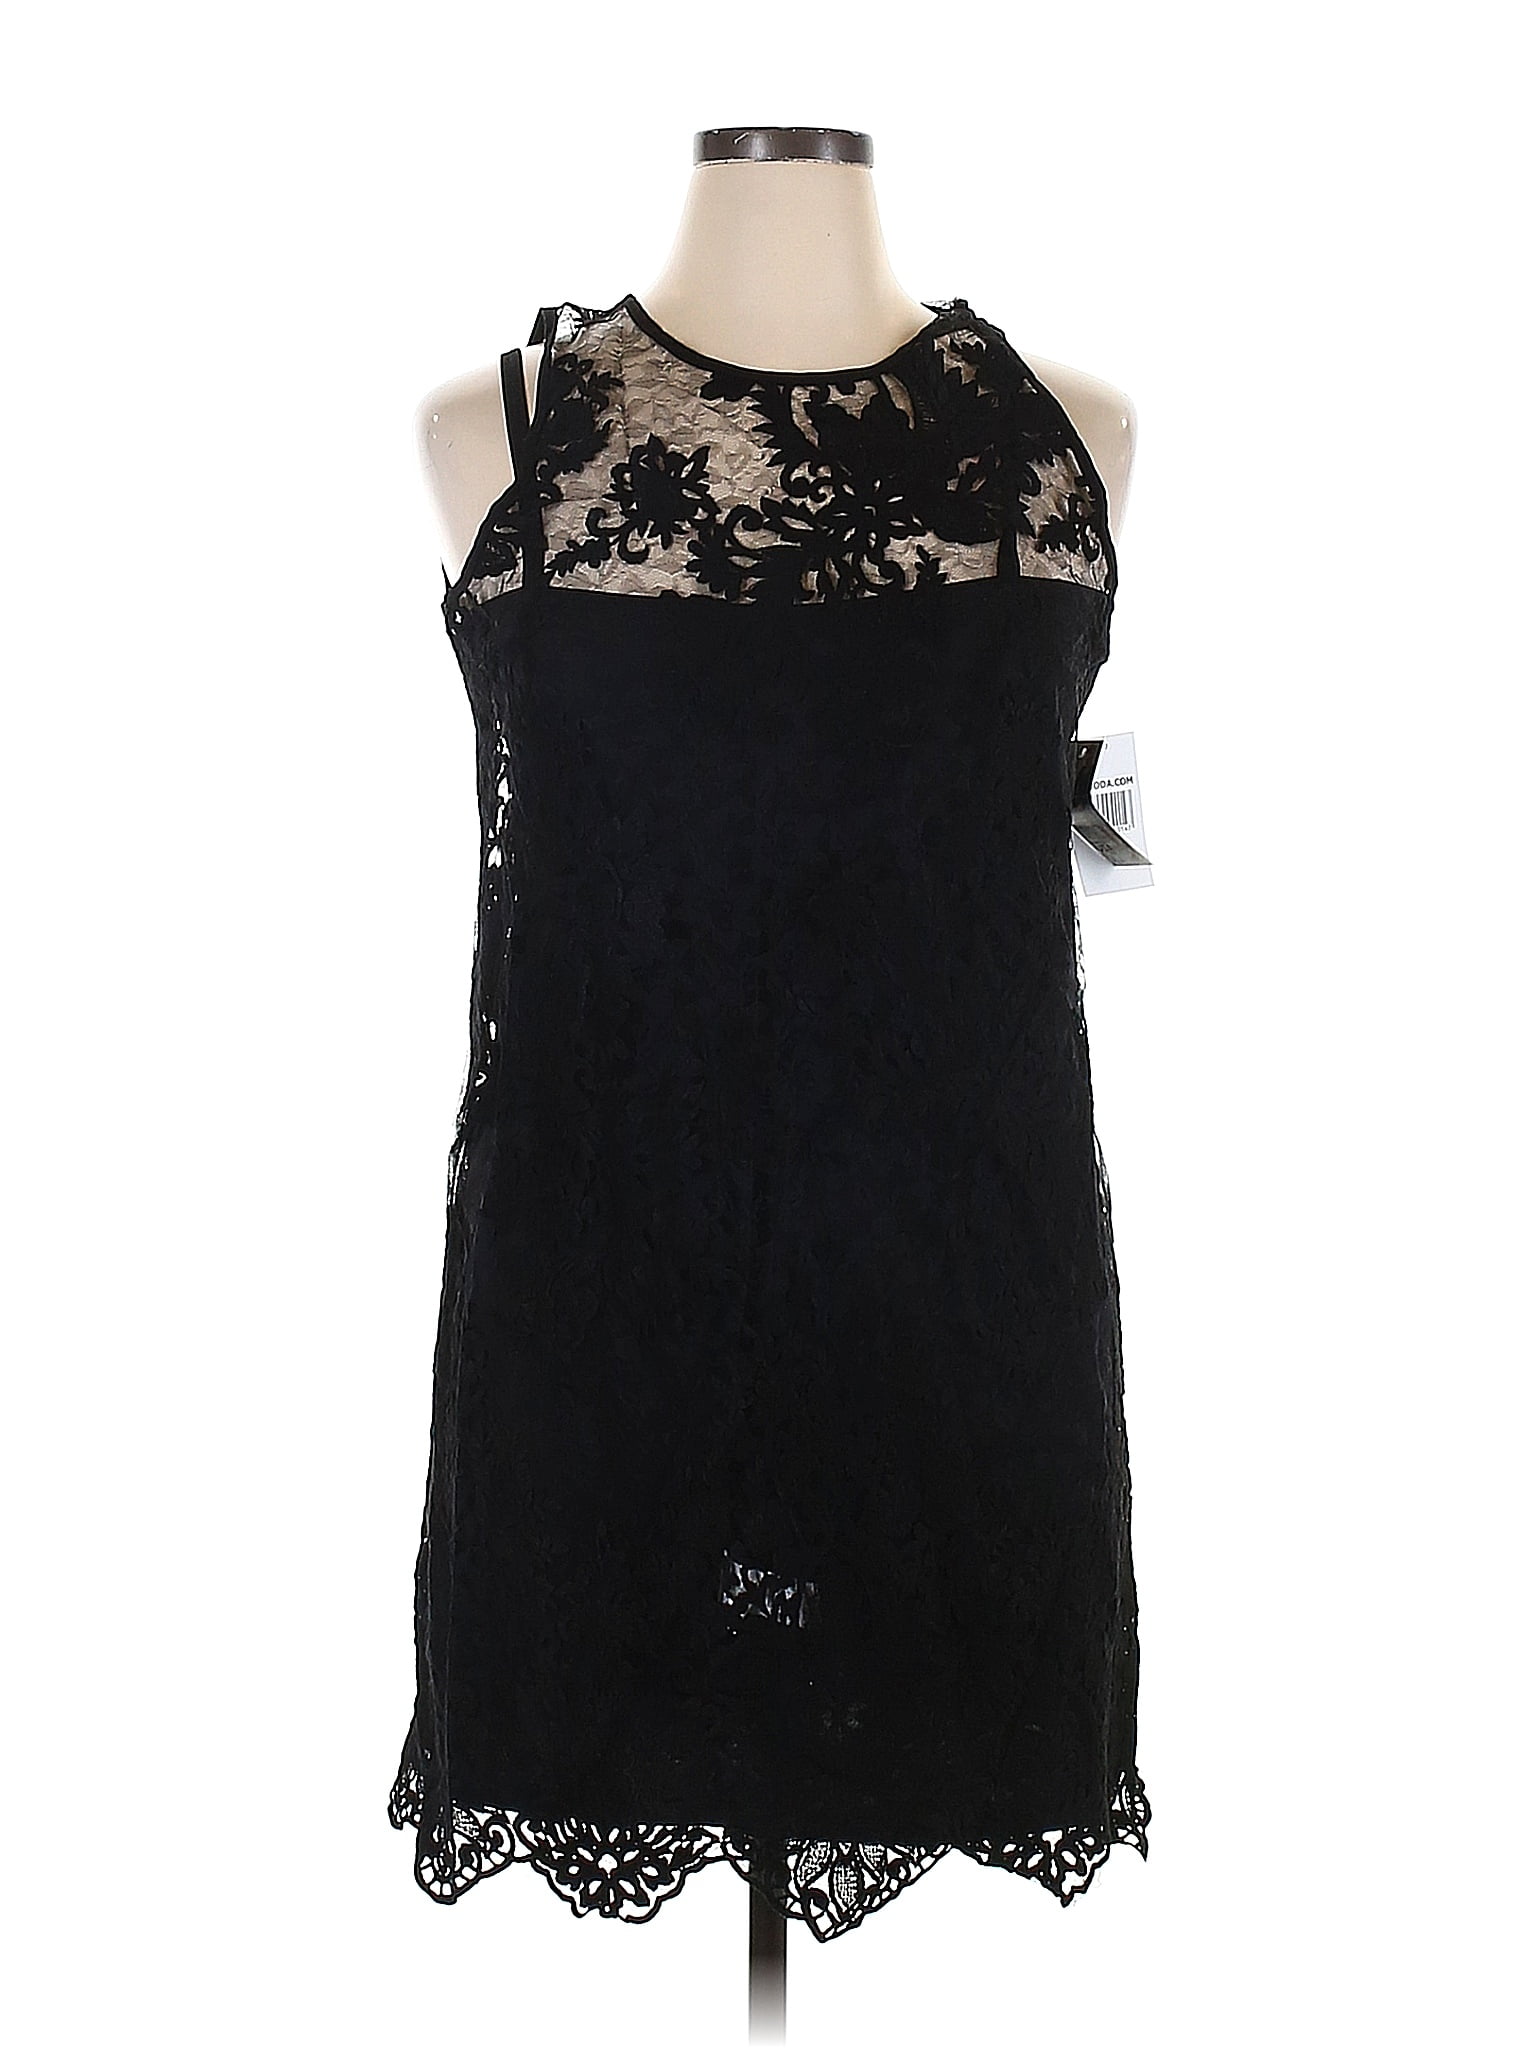 Karen Kane 100% Nylon Black Cocktail Dress Size XL - 77% off | thredUP